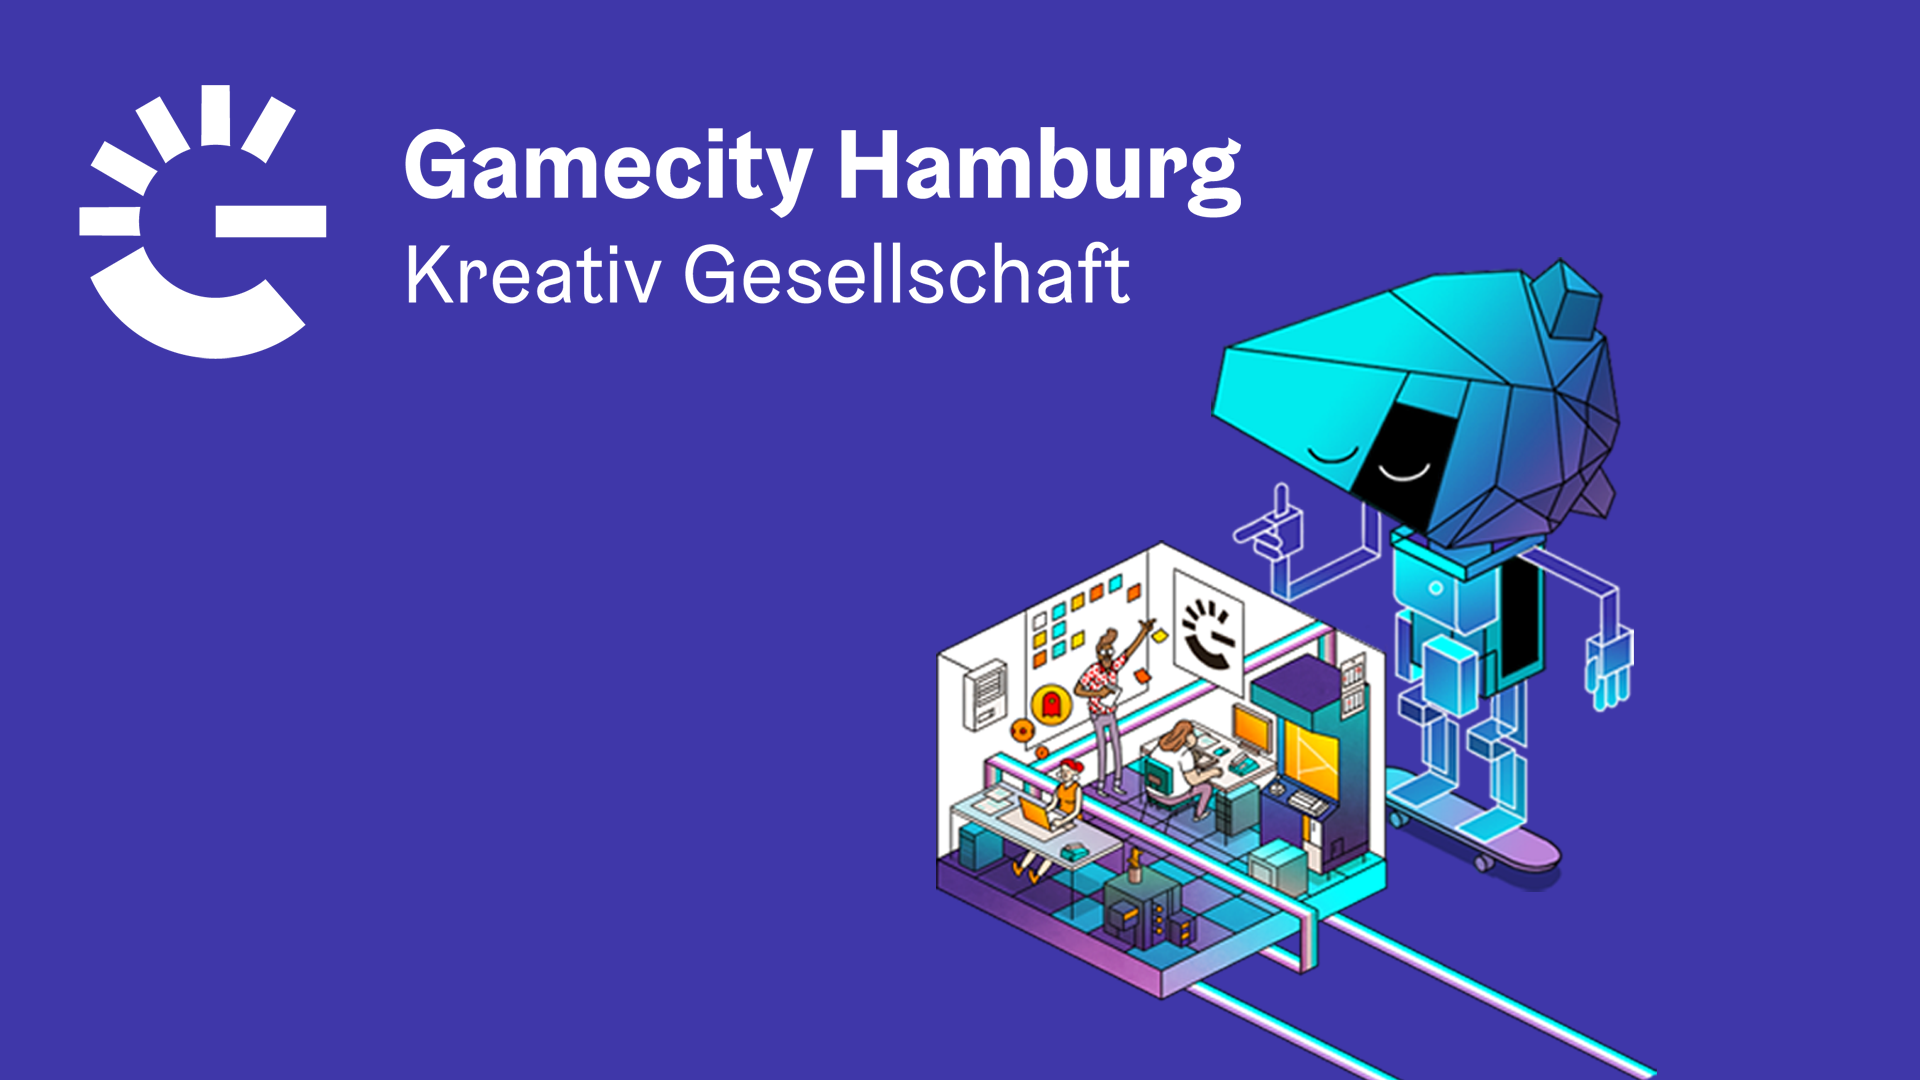 Gamecity Hamburg invests 410,000 euros in game prototypes